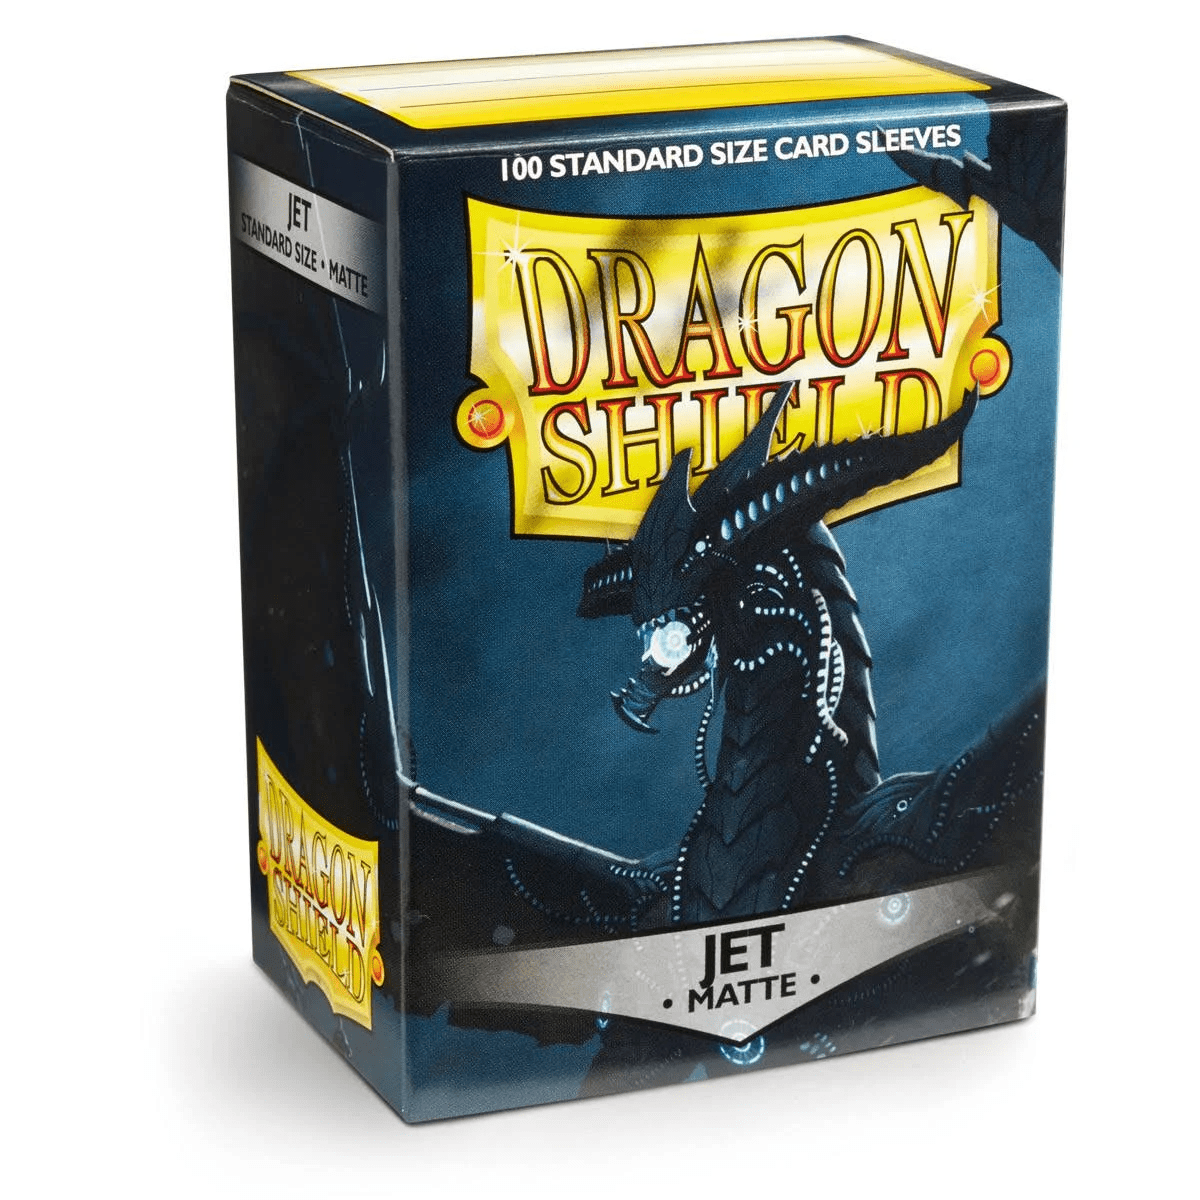 Dragon Shield 100 Count Sleeves Standard Matte Jet - Gamescape